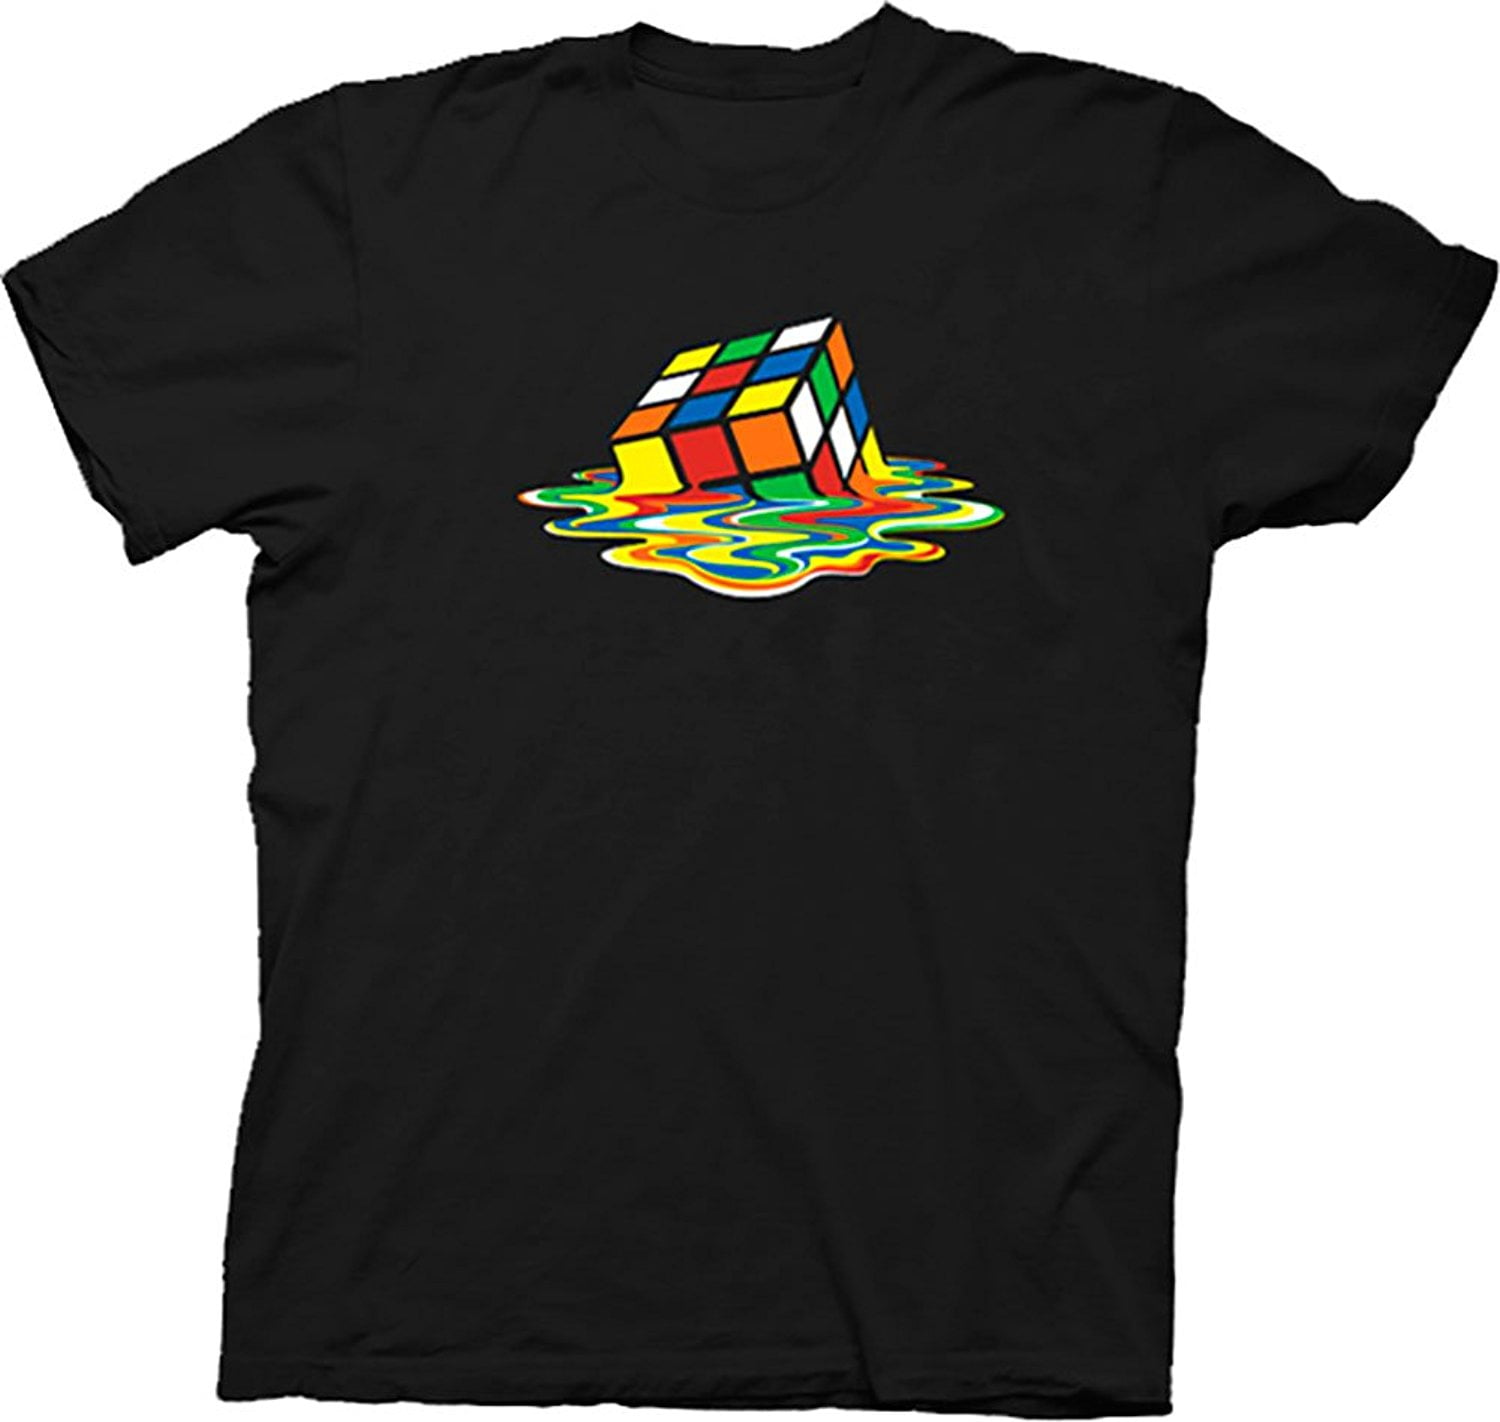 Rubiks Cube Melting Sheldon Cooper The Big Bang Theory Black T-shirt